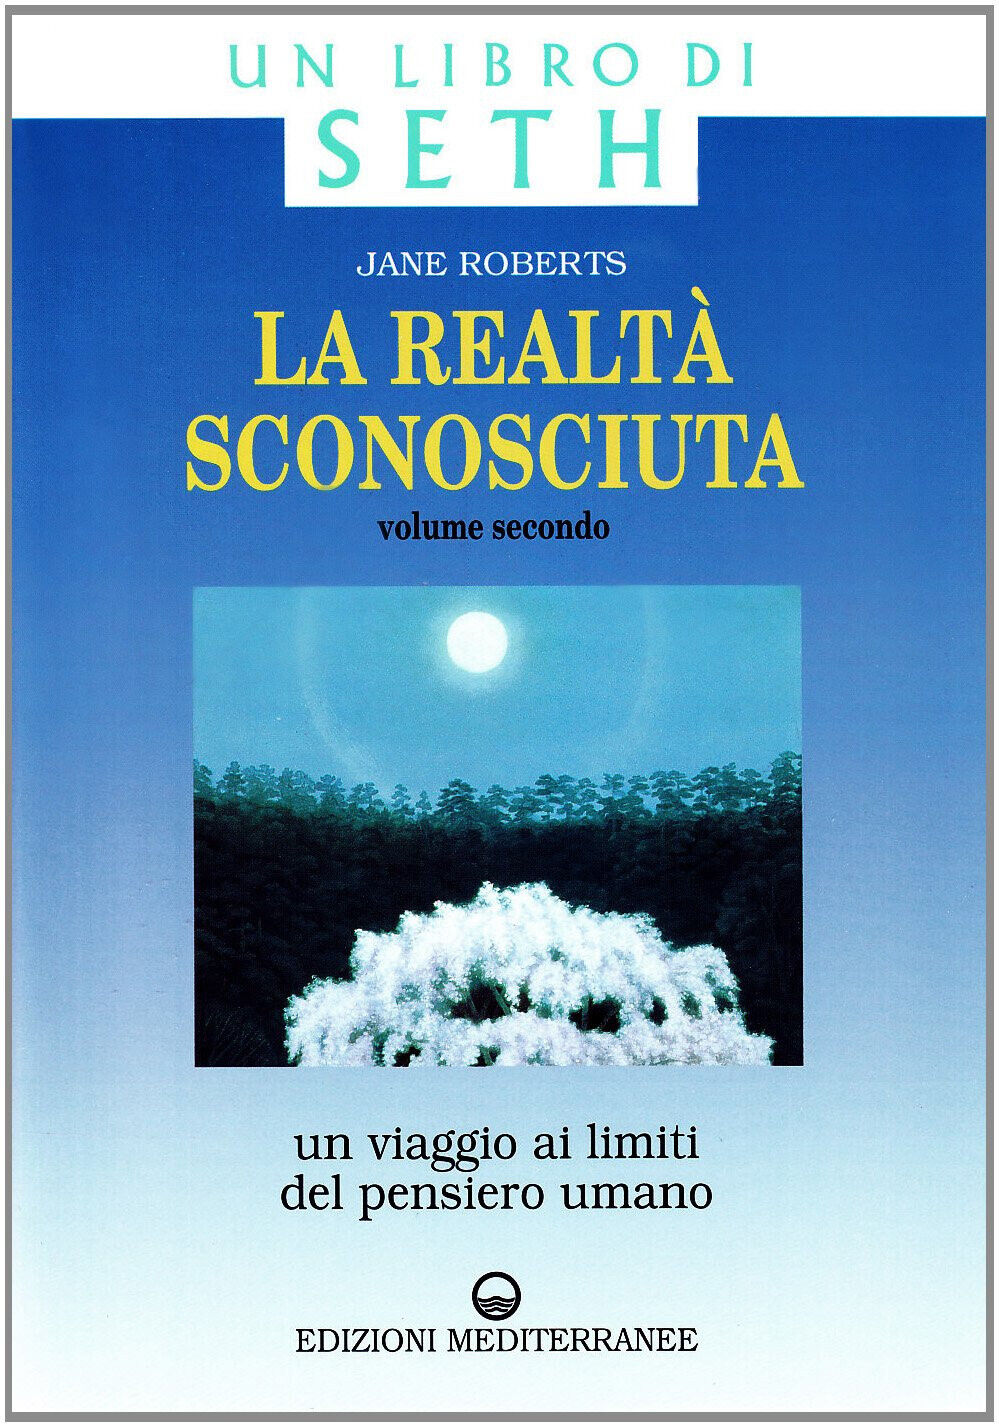 La realt? sconosciuta vol.2 -Jane Roberts - Edizioni mediterranee, 1997 libro usato